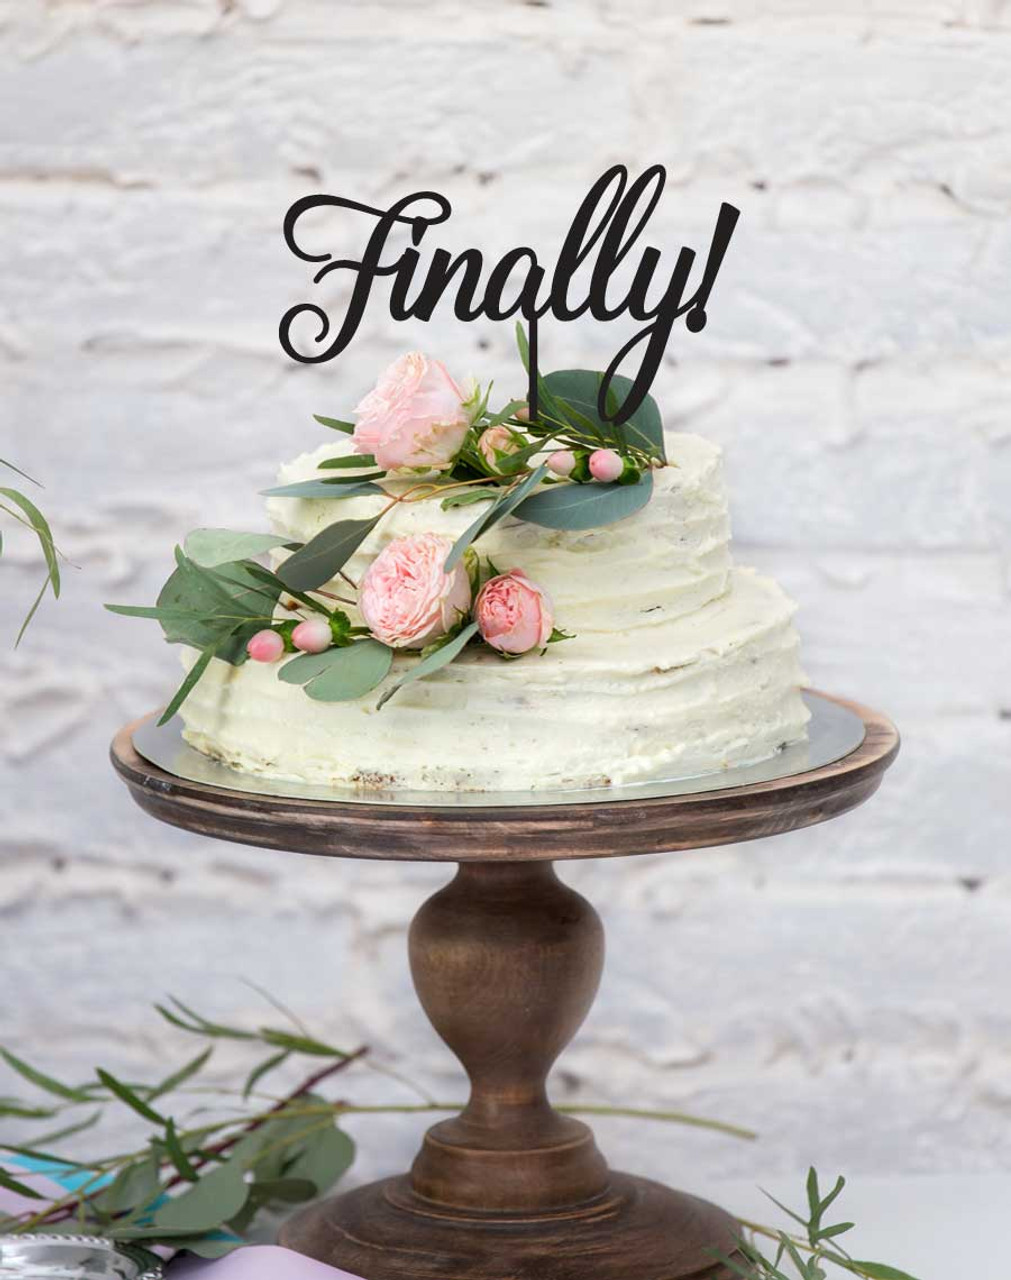 Finally! Wedding Cake - Made to Order - Finally! Wedding or Engagement Cake Decoration